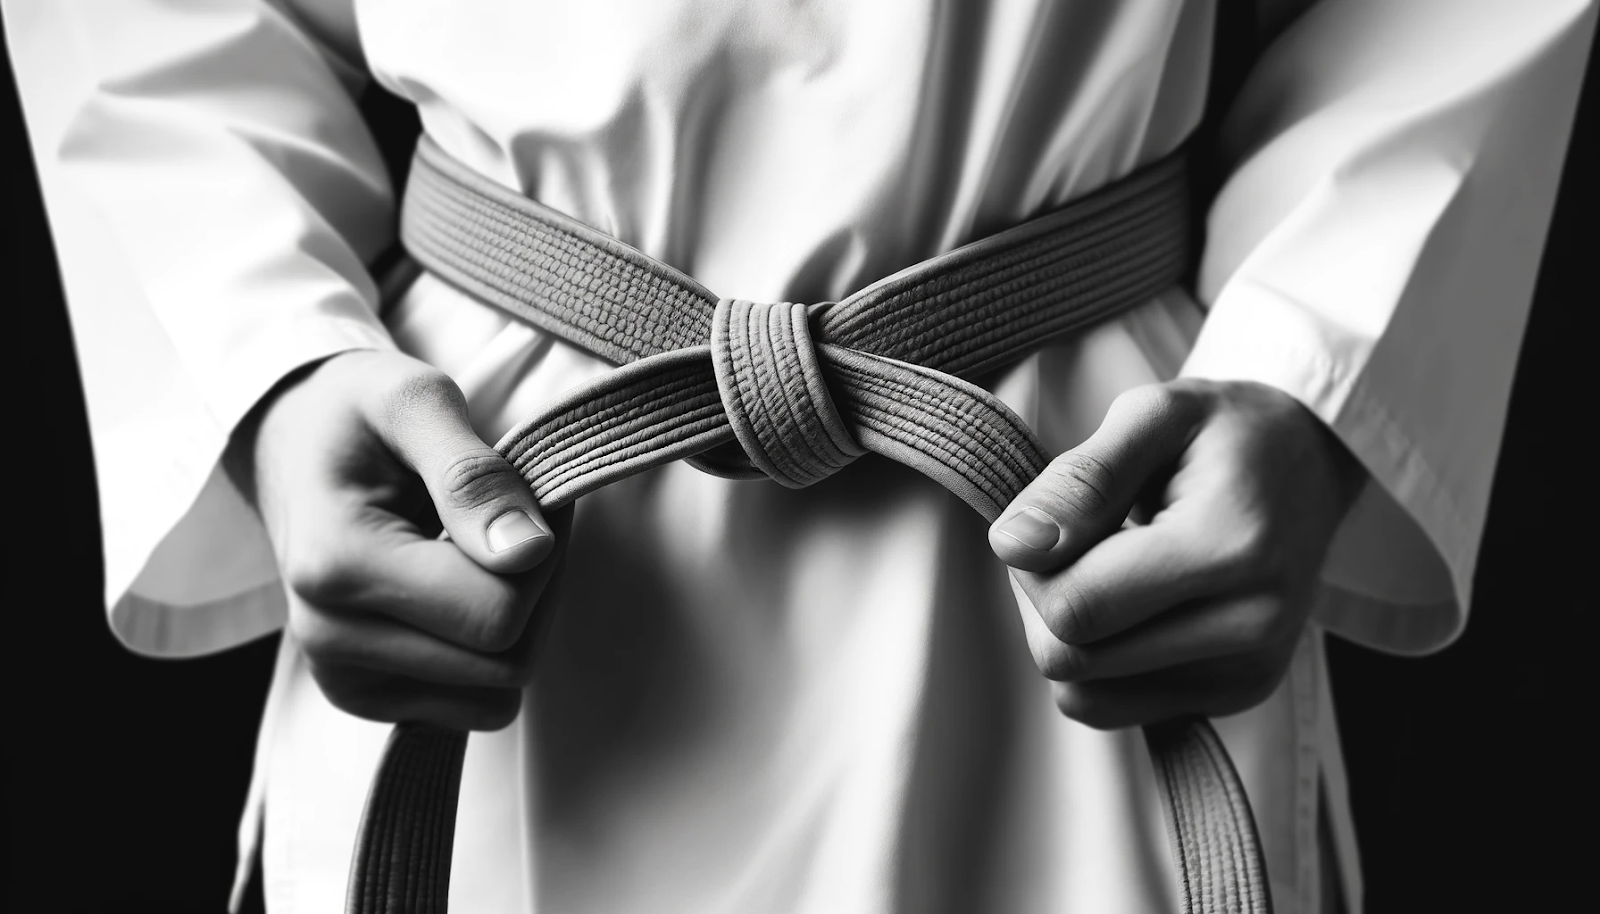 A close-up image of a Taekwondo belt